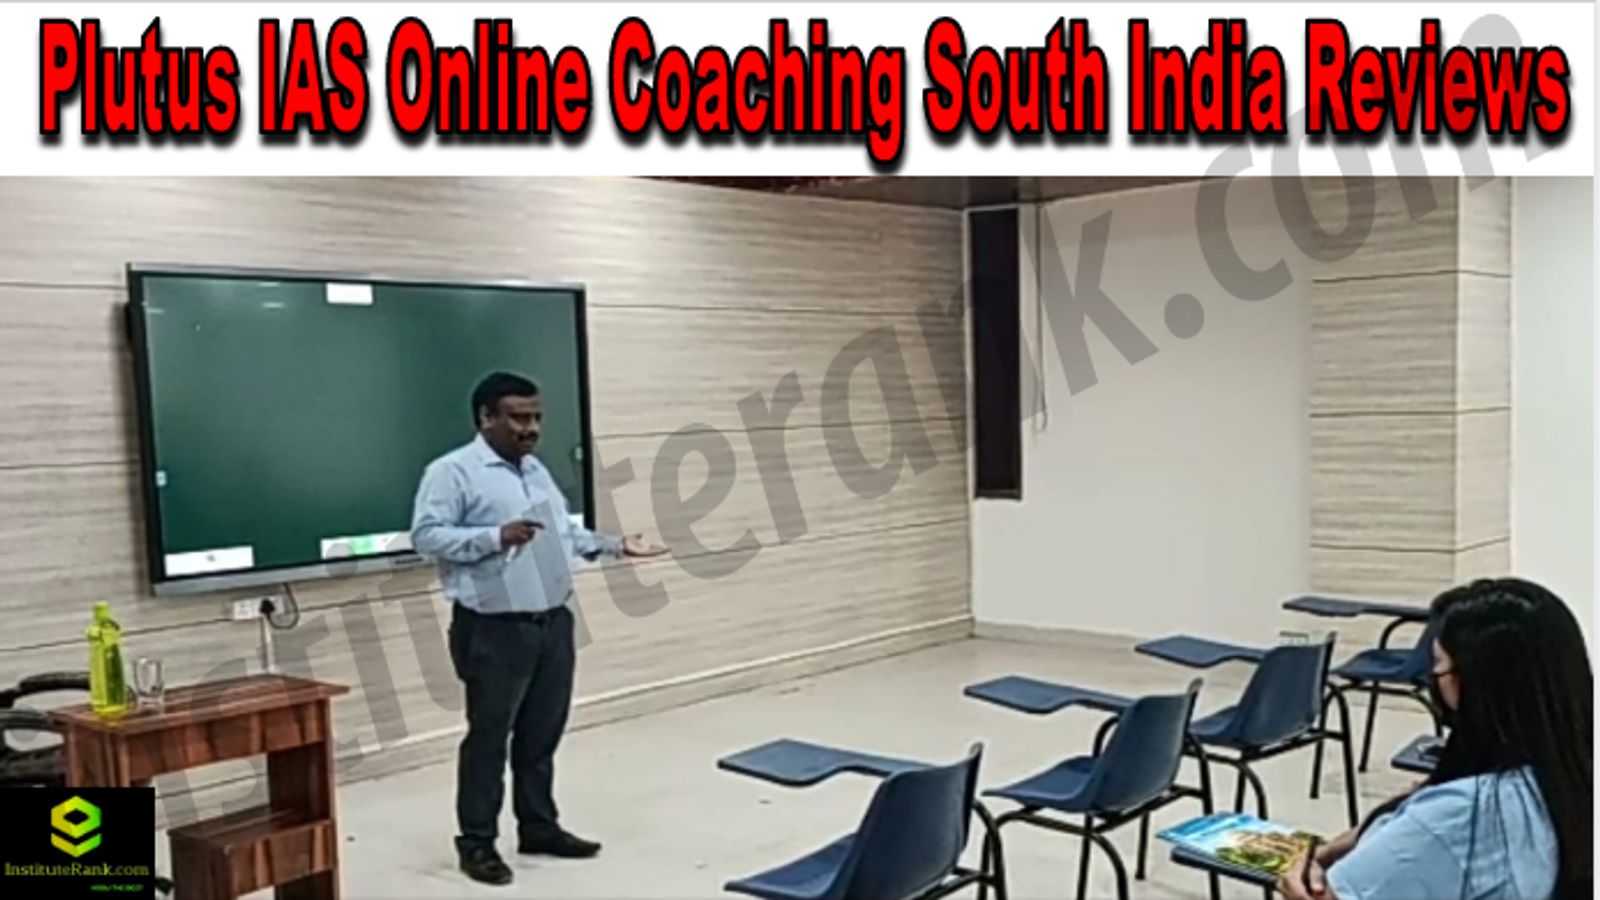 Plutus IAS Online Coaching South India Reviews